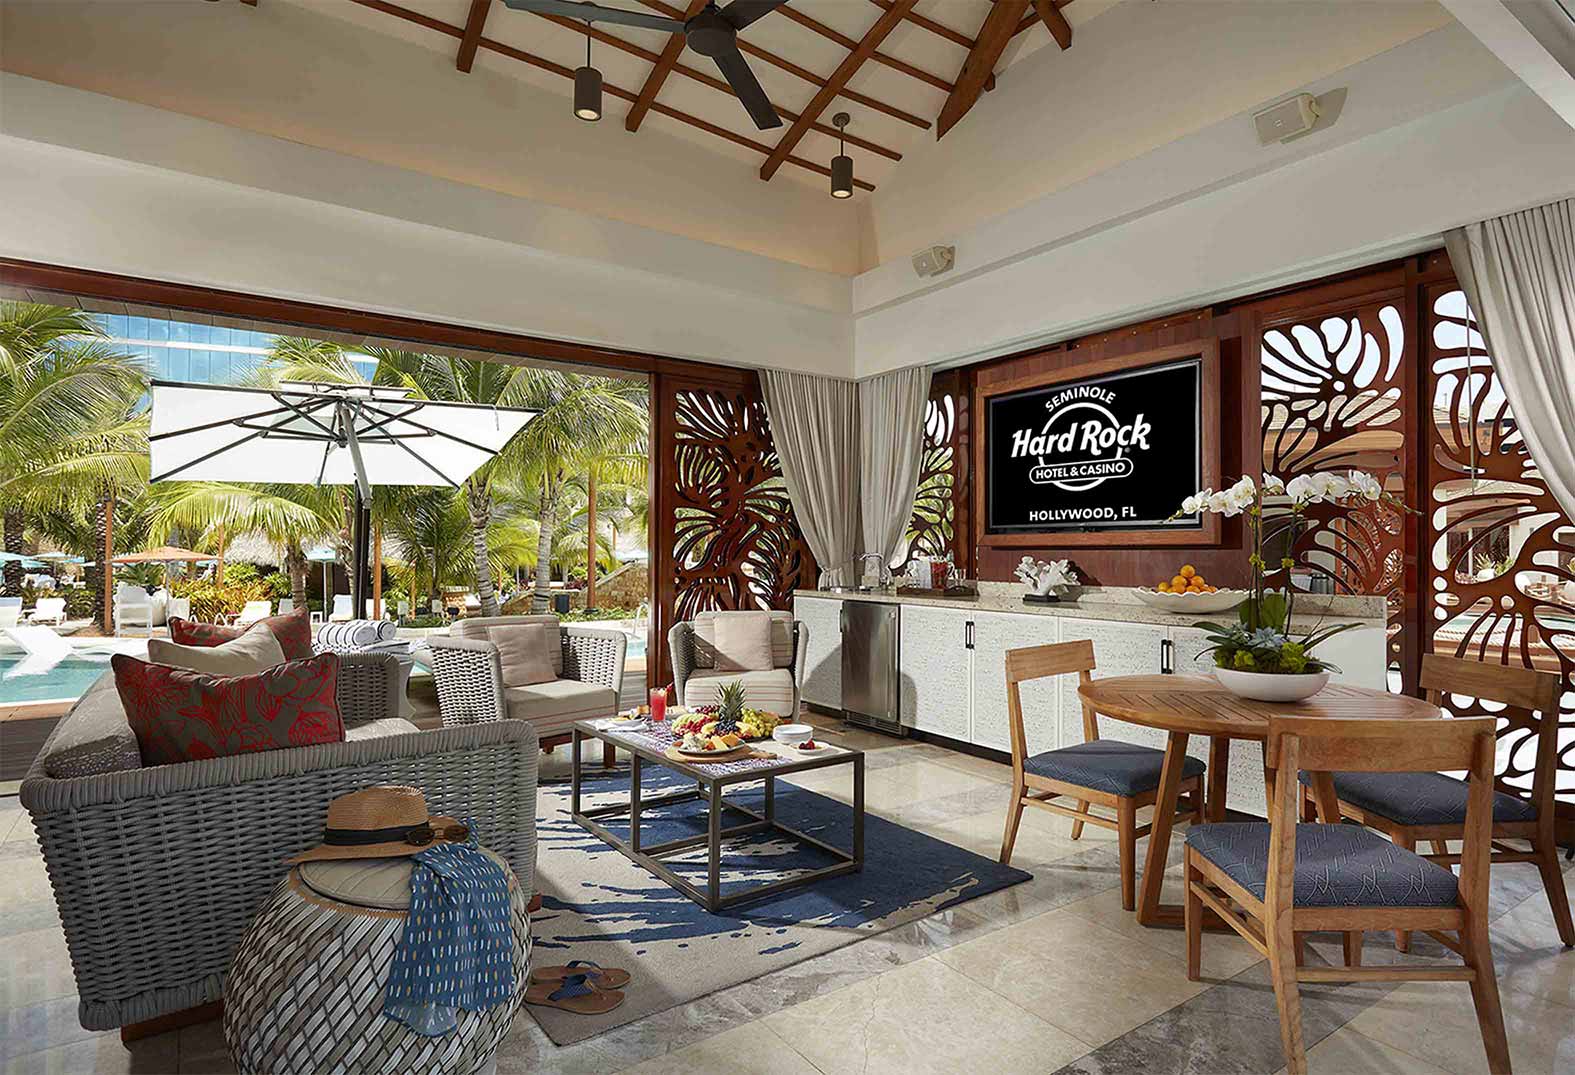 The Guitar Hotel Bora Bora pool cabanas